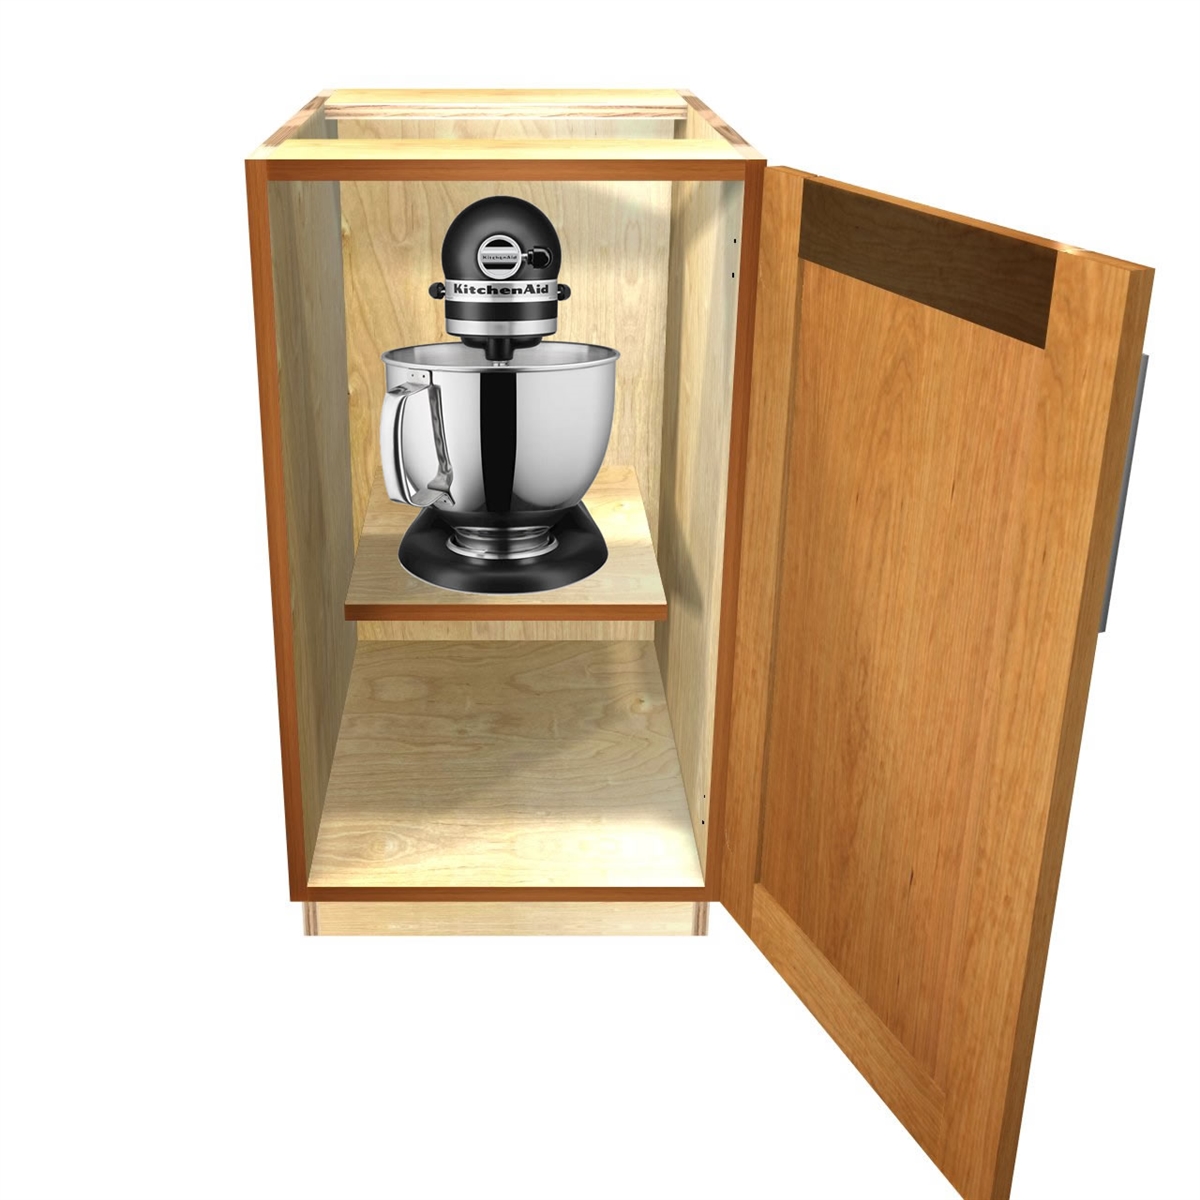 1 door base cabinet with heavy duty mixer lift (*mixer not included)